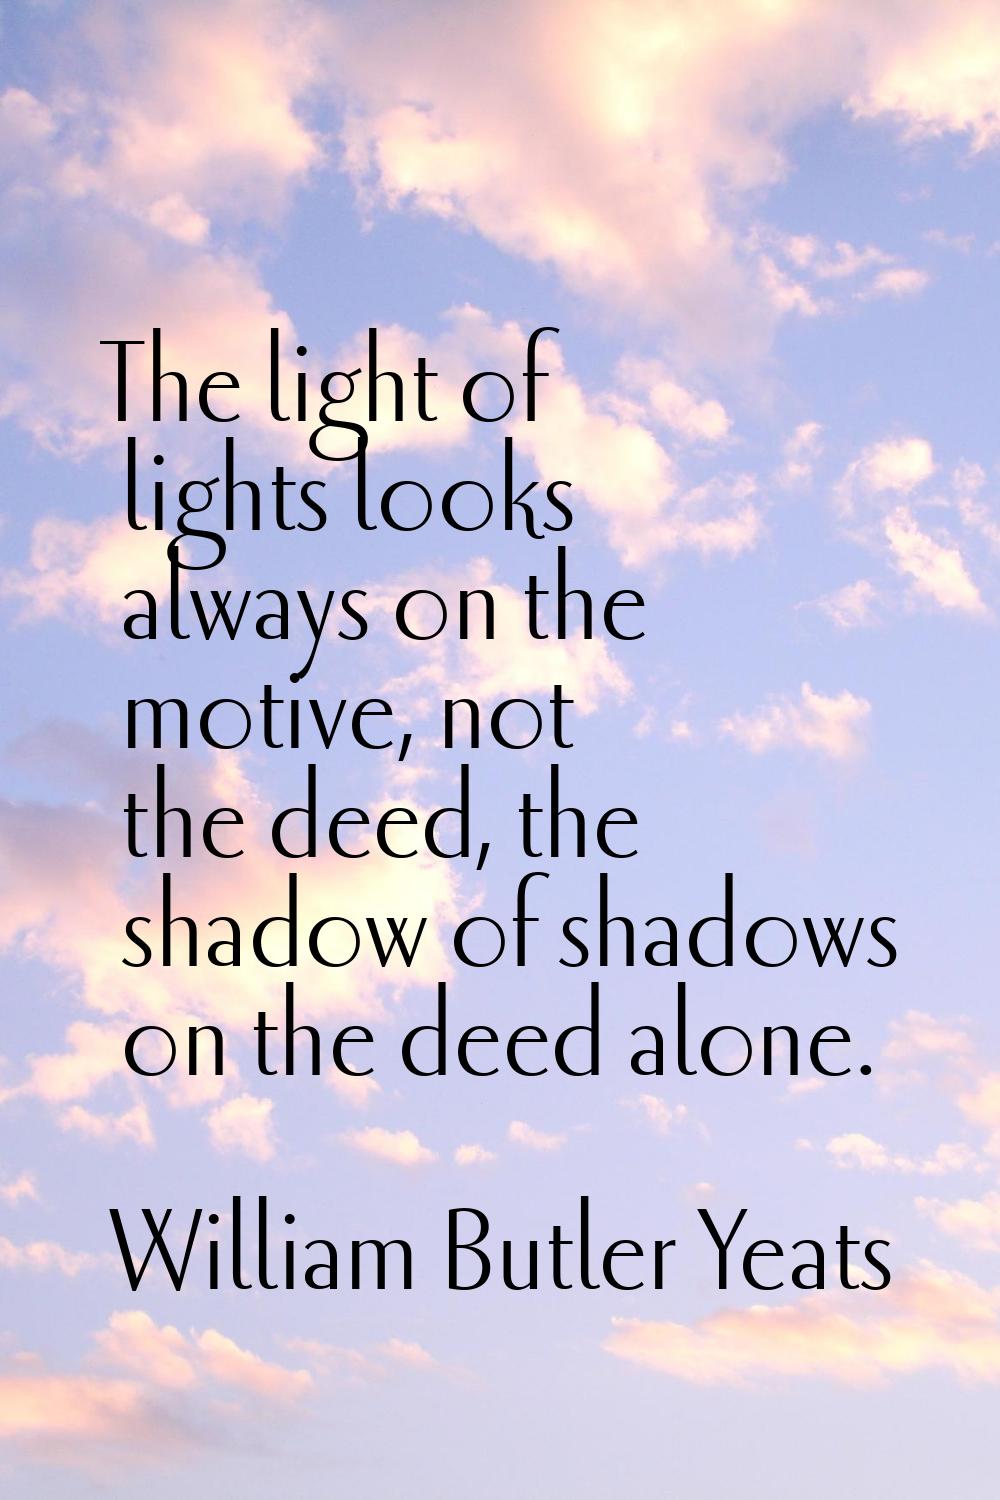 The light of lights looks always on the motive, not the deed, the shadow of shadows on the deed alo